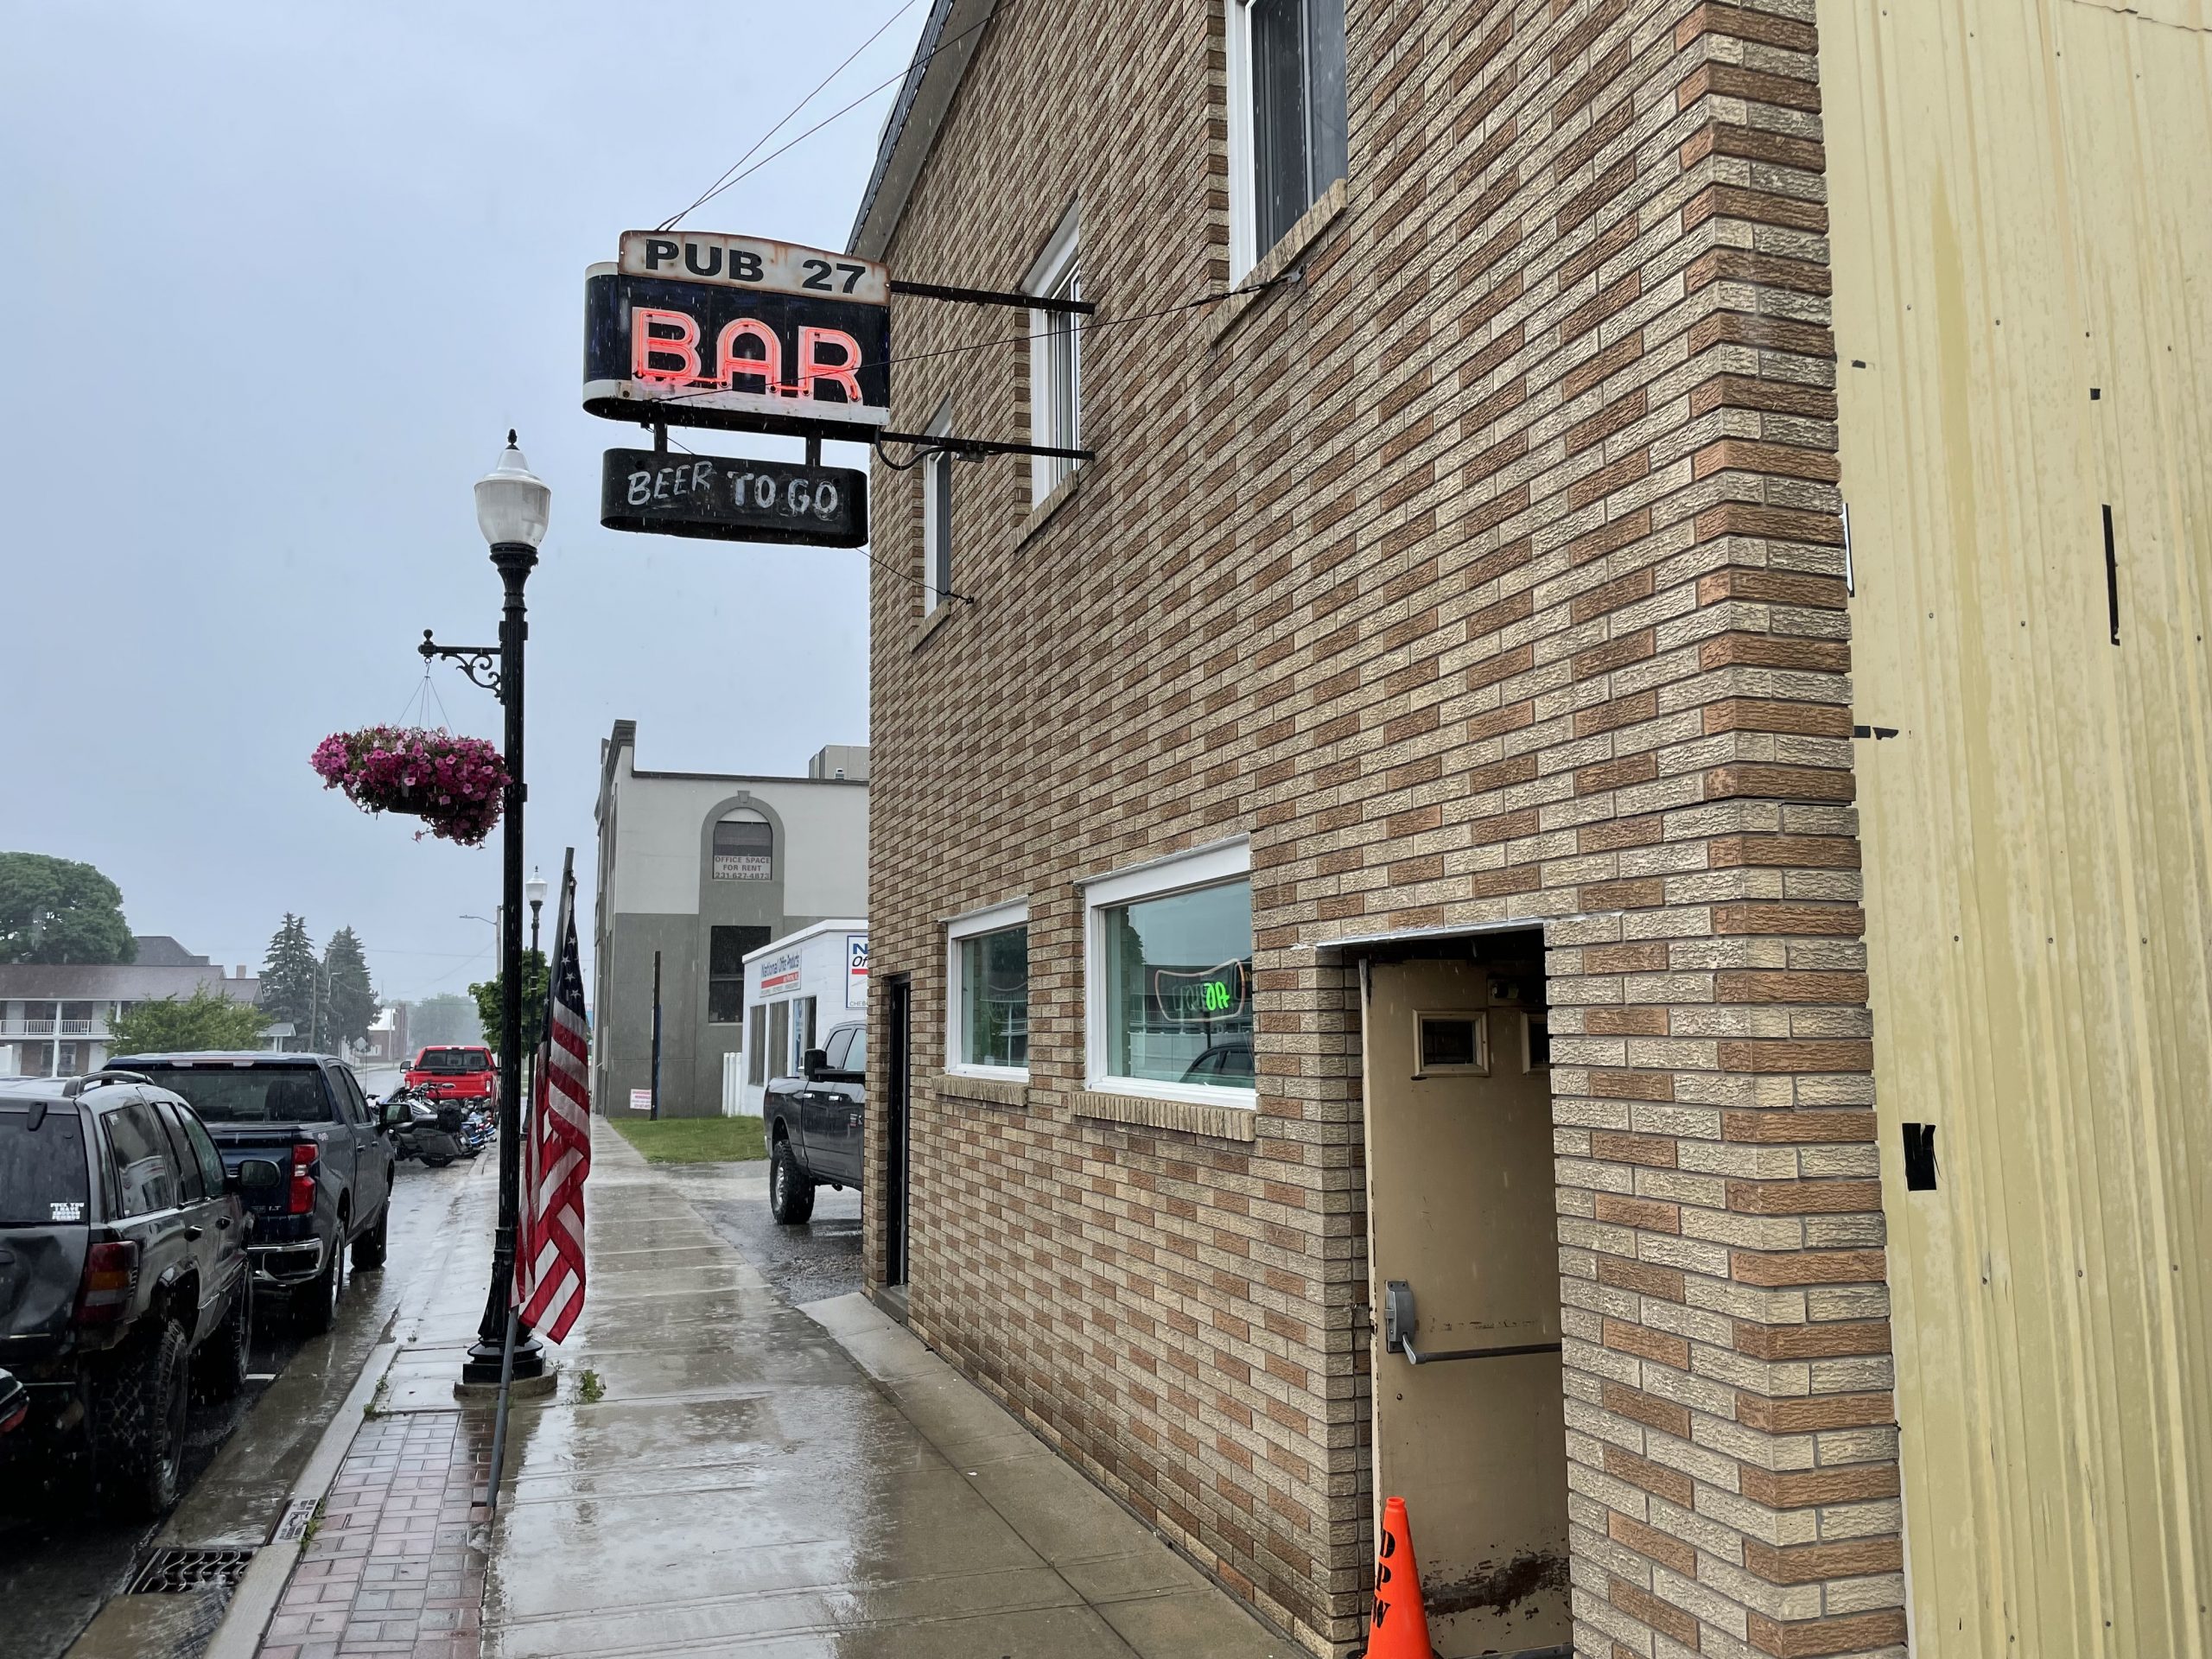 Pub 27 - Cheboygan Dive Bar - Outside Sign